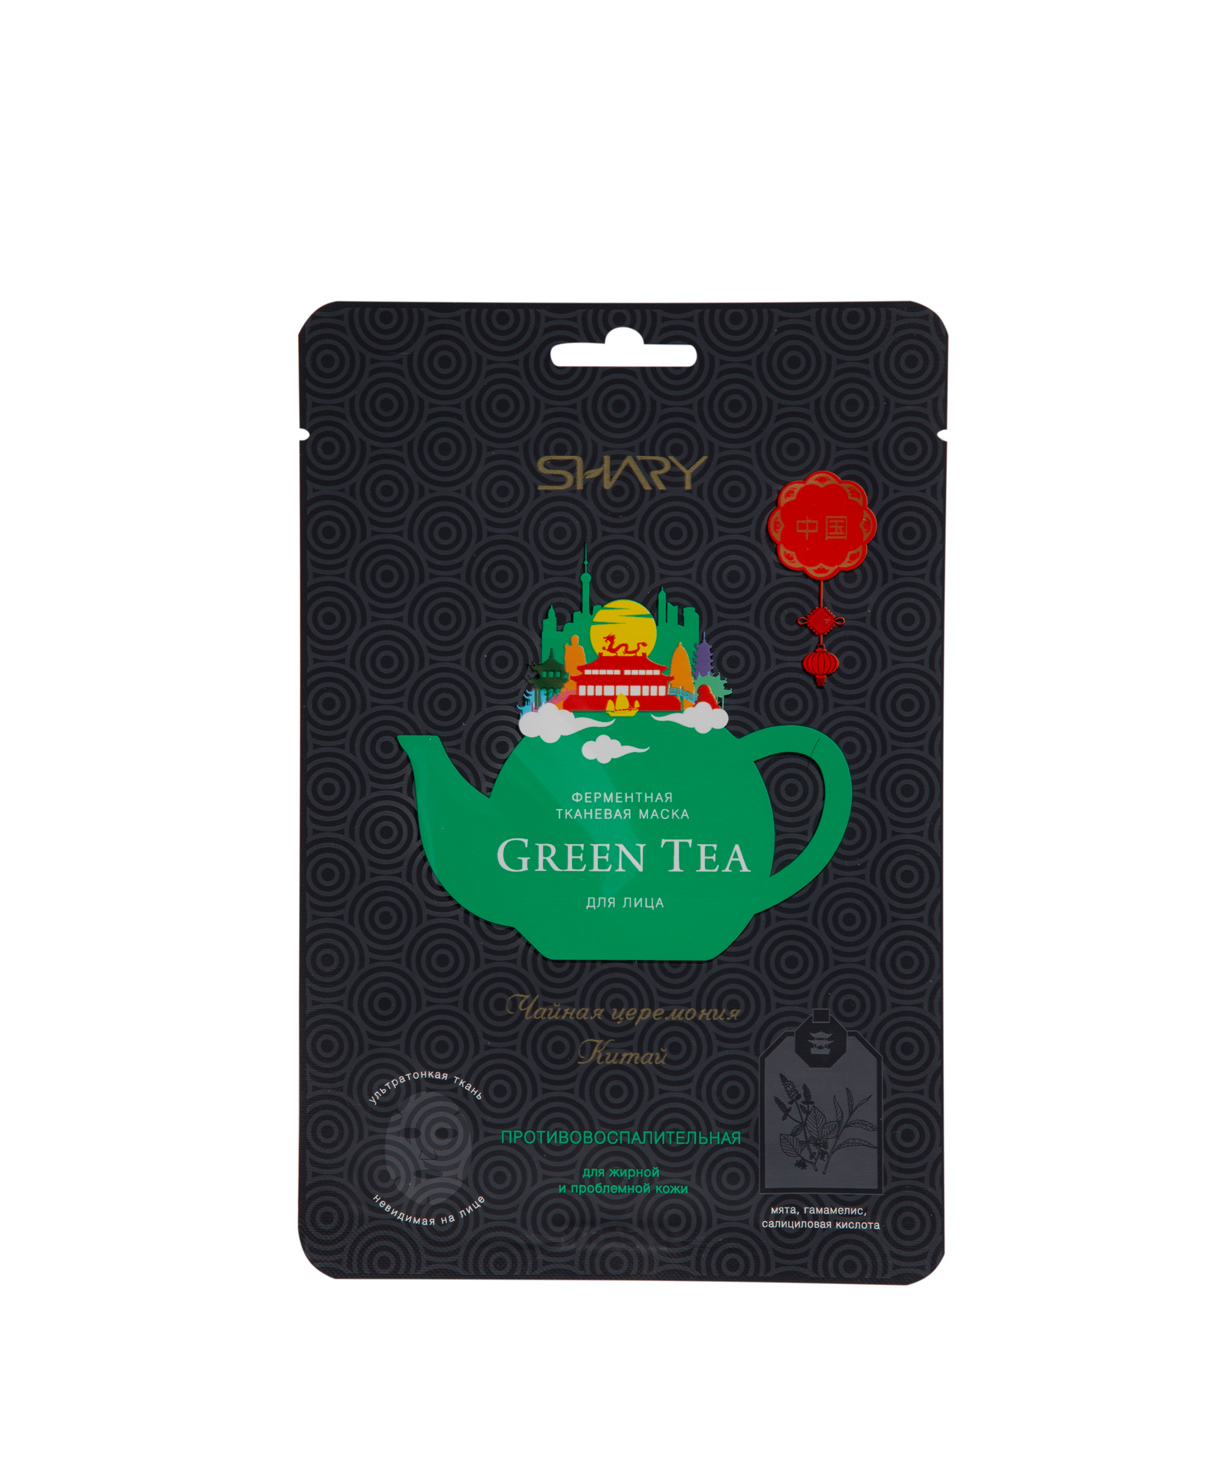 Fabric mask `Shary` Green Tea